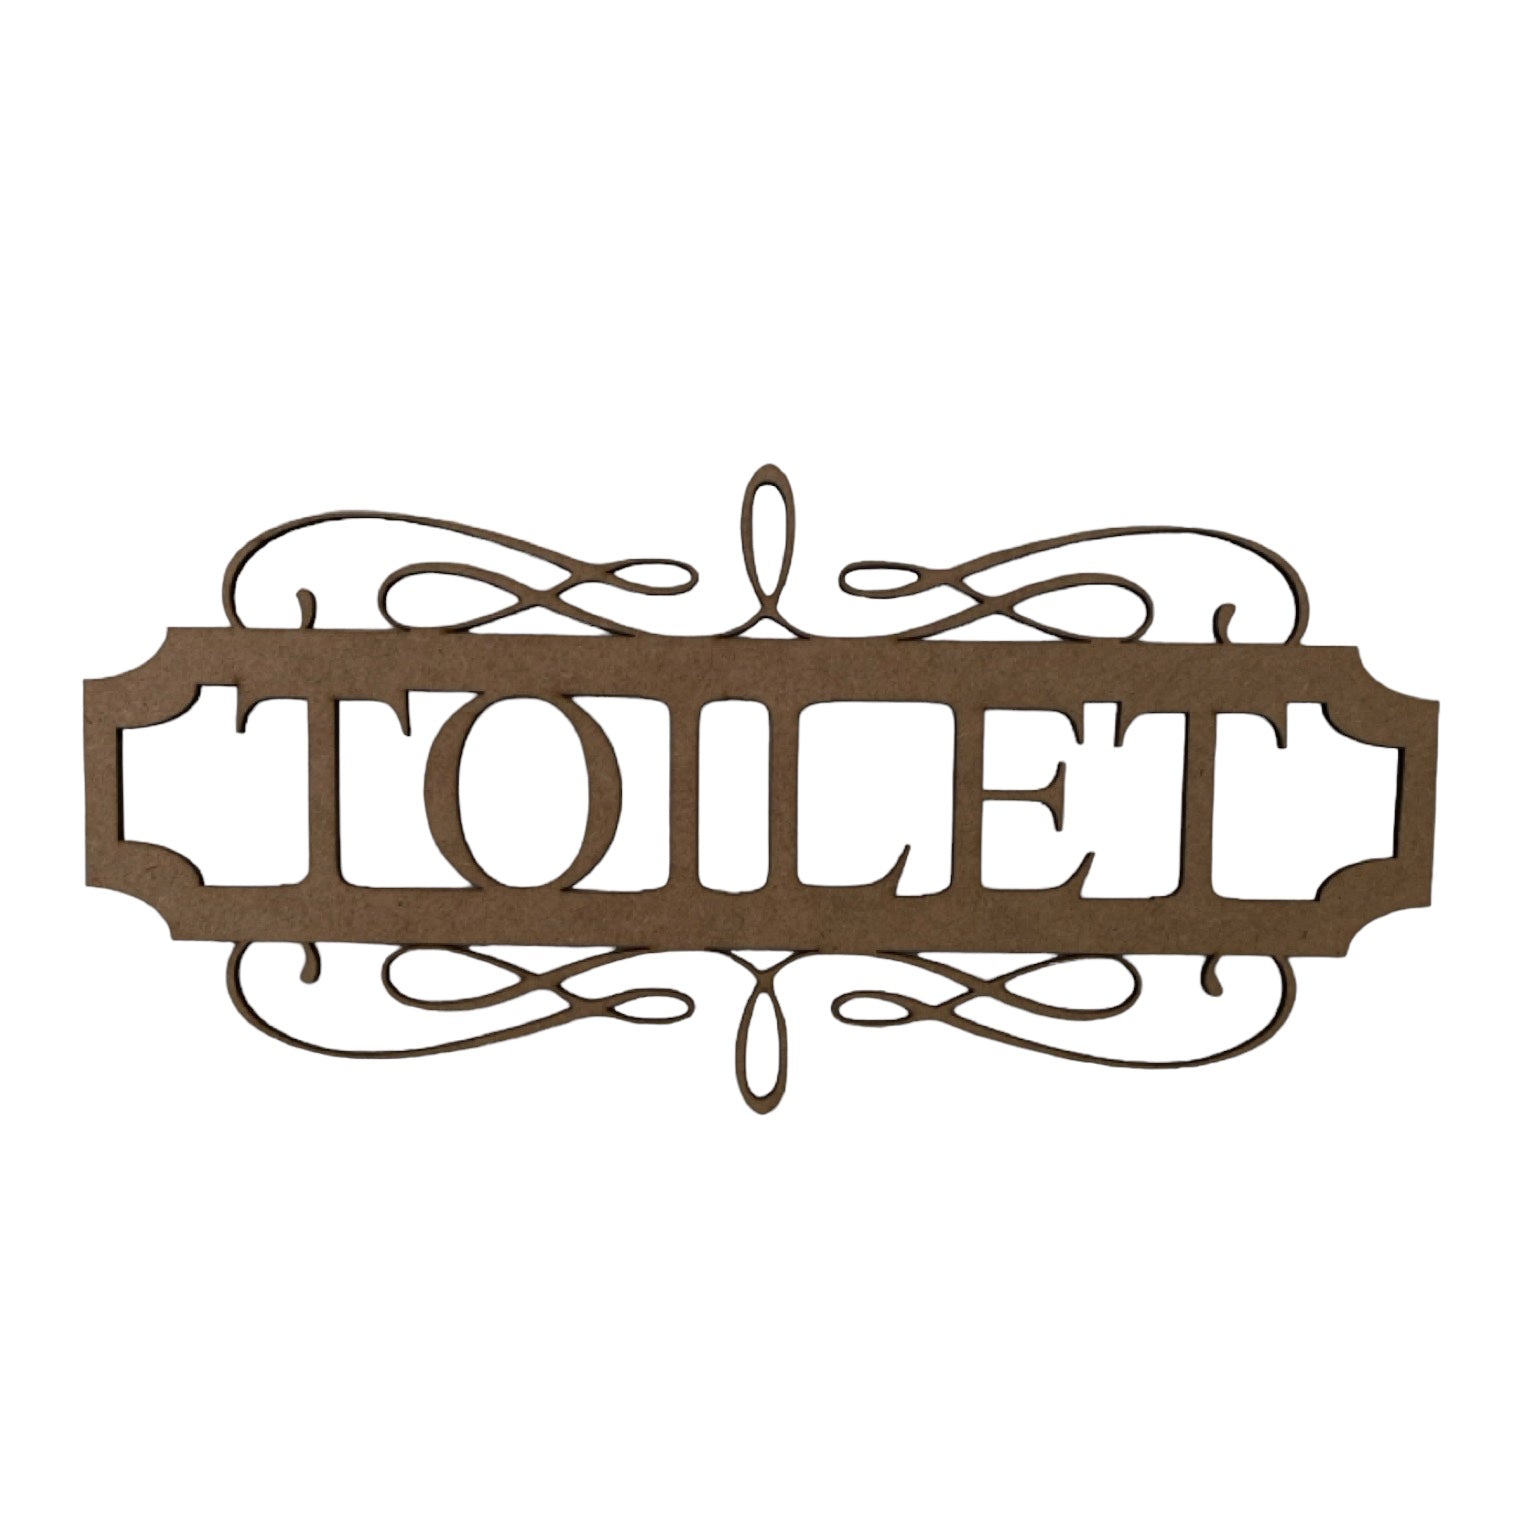 Toilet Laundry Bathroom Door Sign Set MDF DIY Wooden Vintage - The Renmy Store Homewares & Gifts 